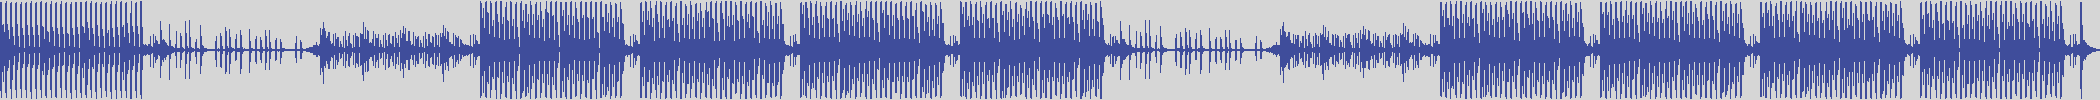 nf_boyz_records [NFY042] Jack Laurel Project - My Harem [Red Zone Mix] audio wave form